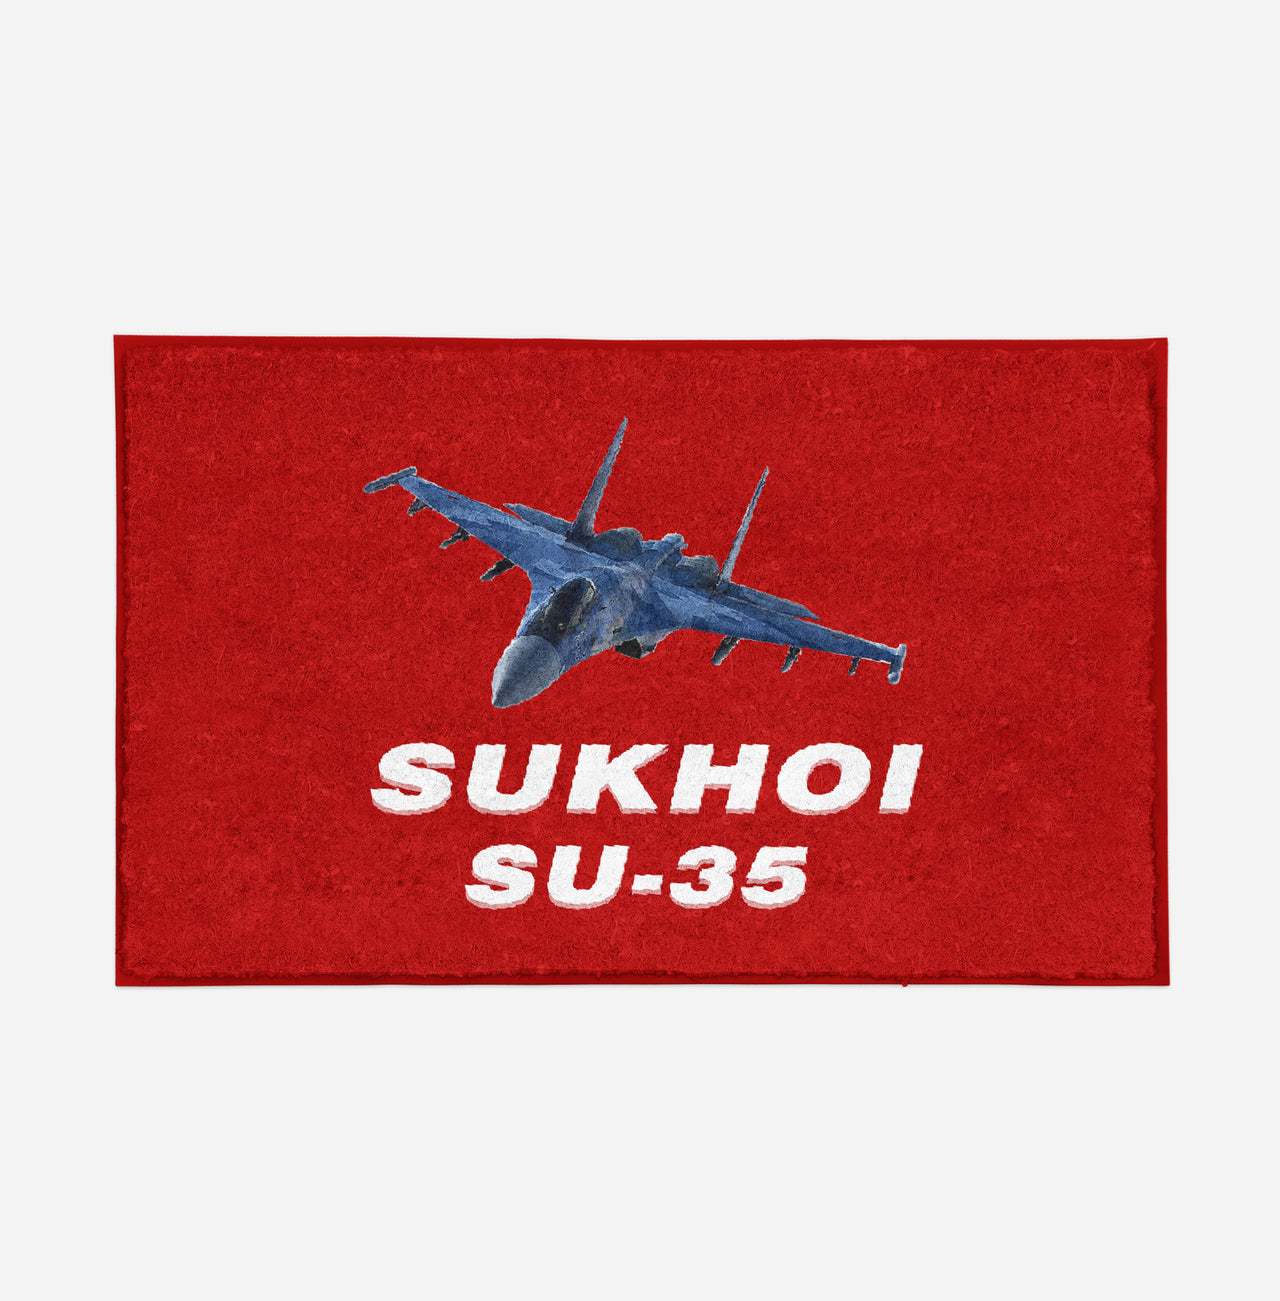 The Sukhoi SU-35 Designed Door Mats